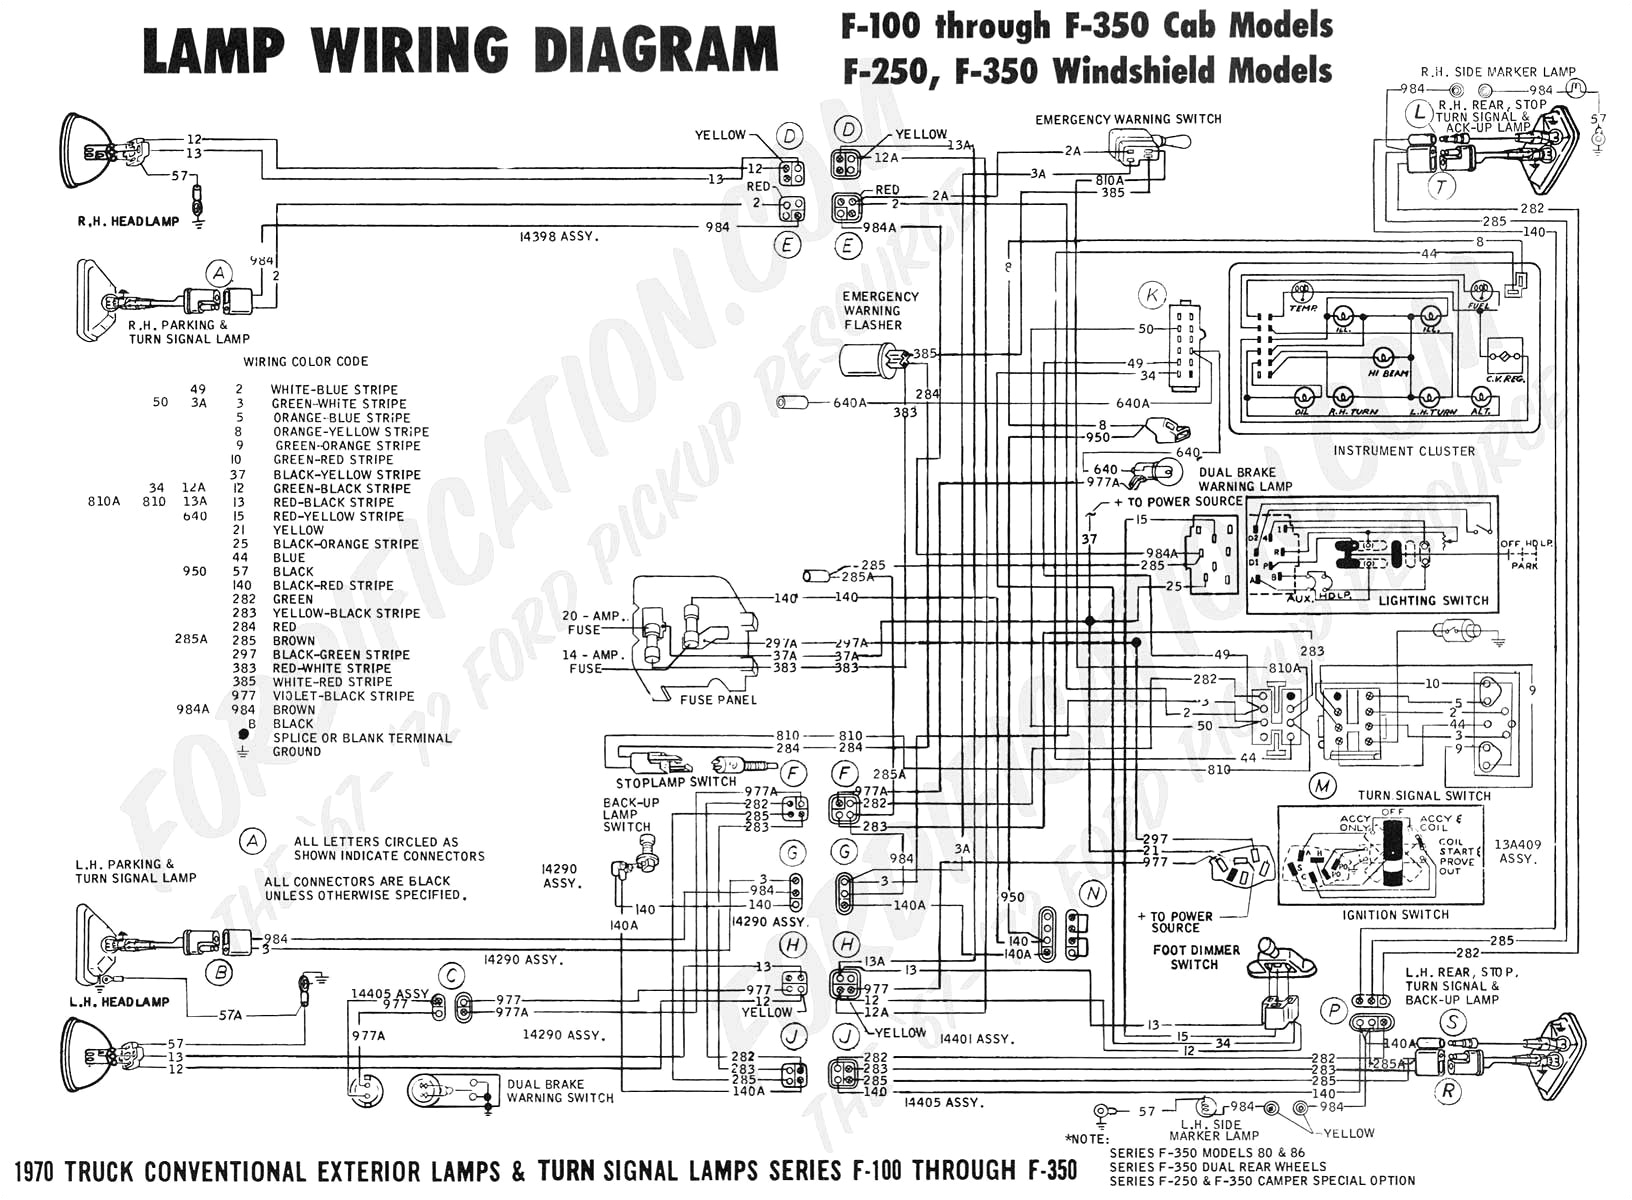 gq headlight wiring diagram data wiring diagram gq patrol headlight wiring diagram gq headlight wiring diagram